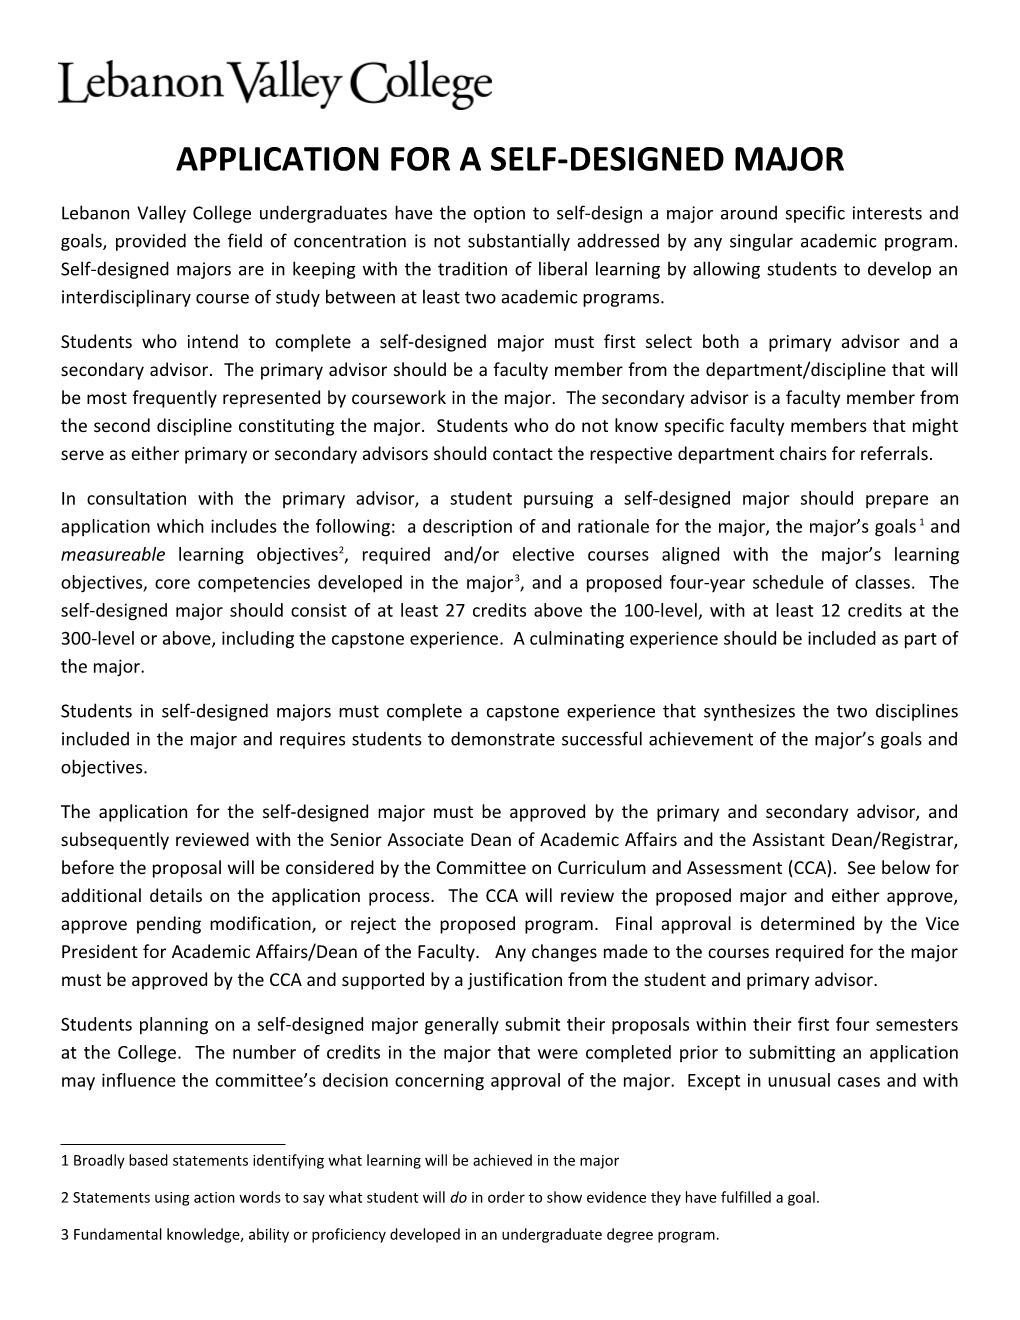 Application for a Self-Designed Major